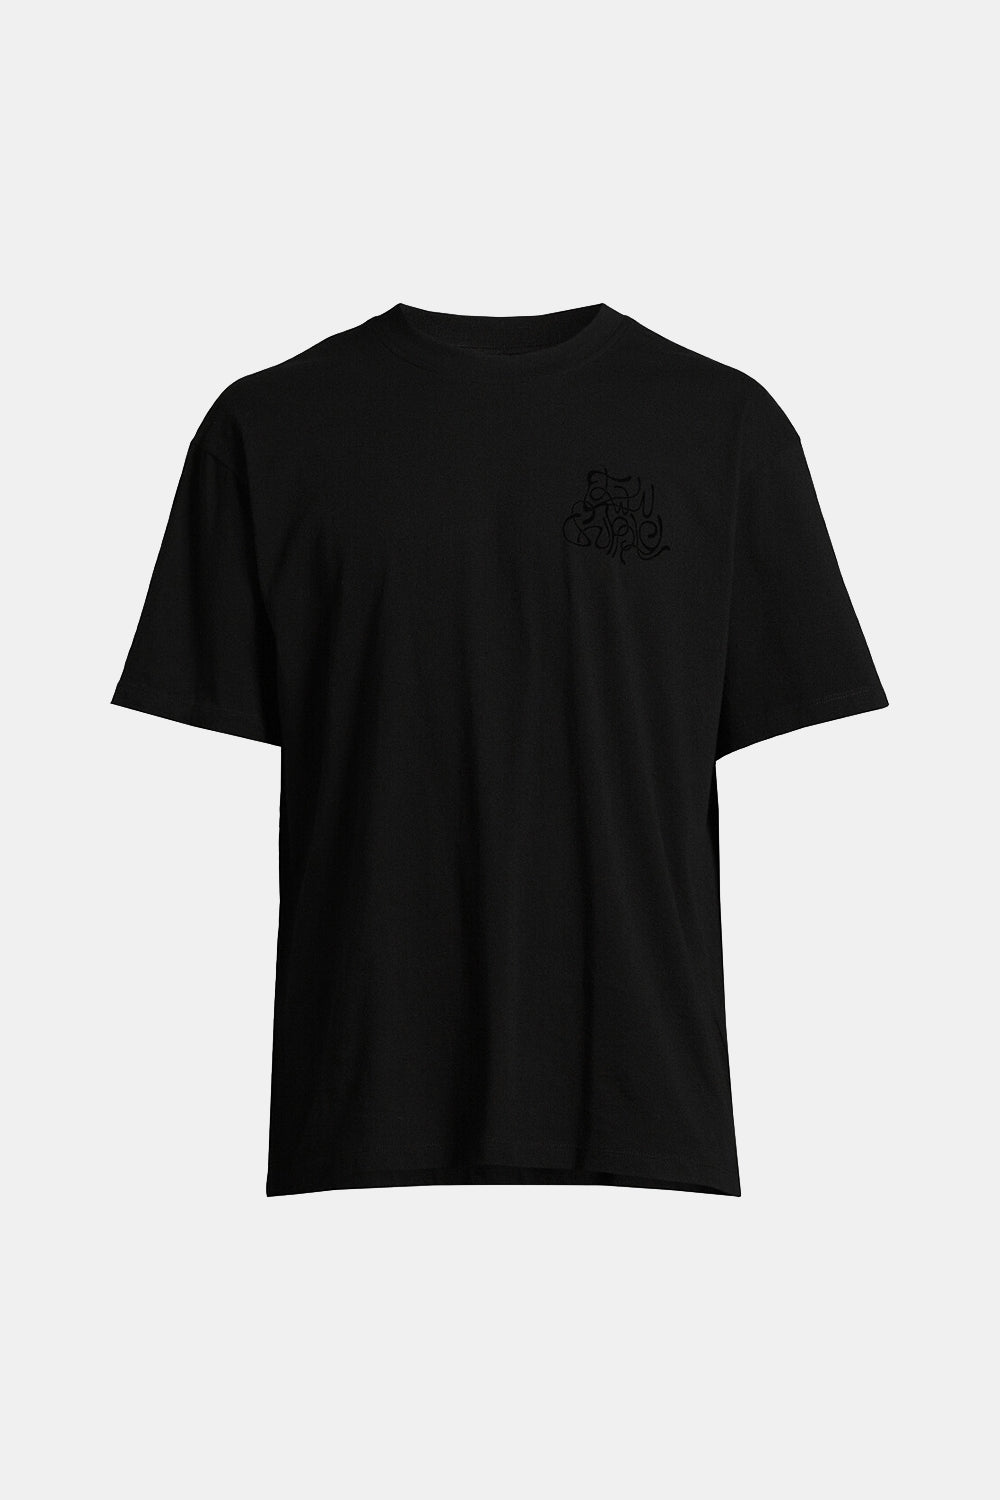 Edwin Hoffmann T-Shirt (Black Garment Wash)